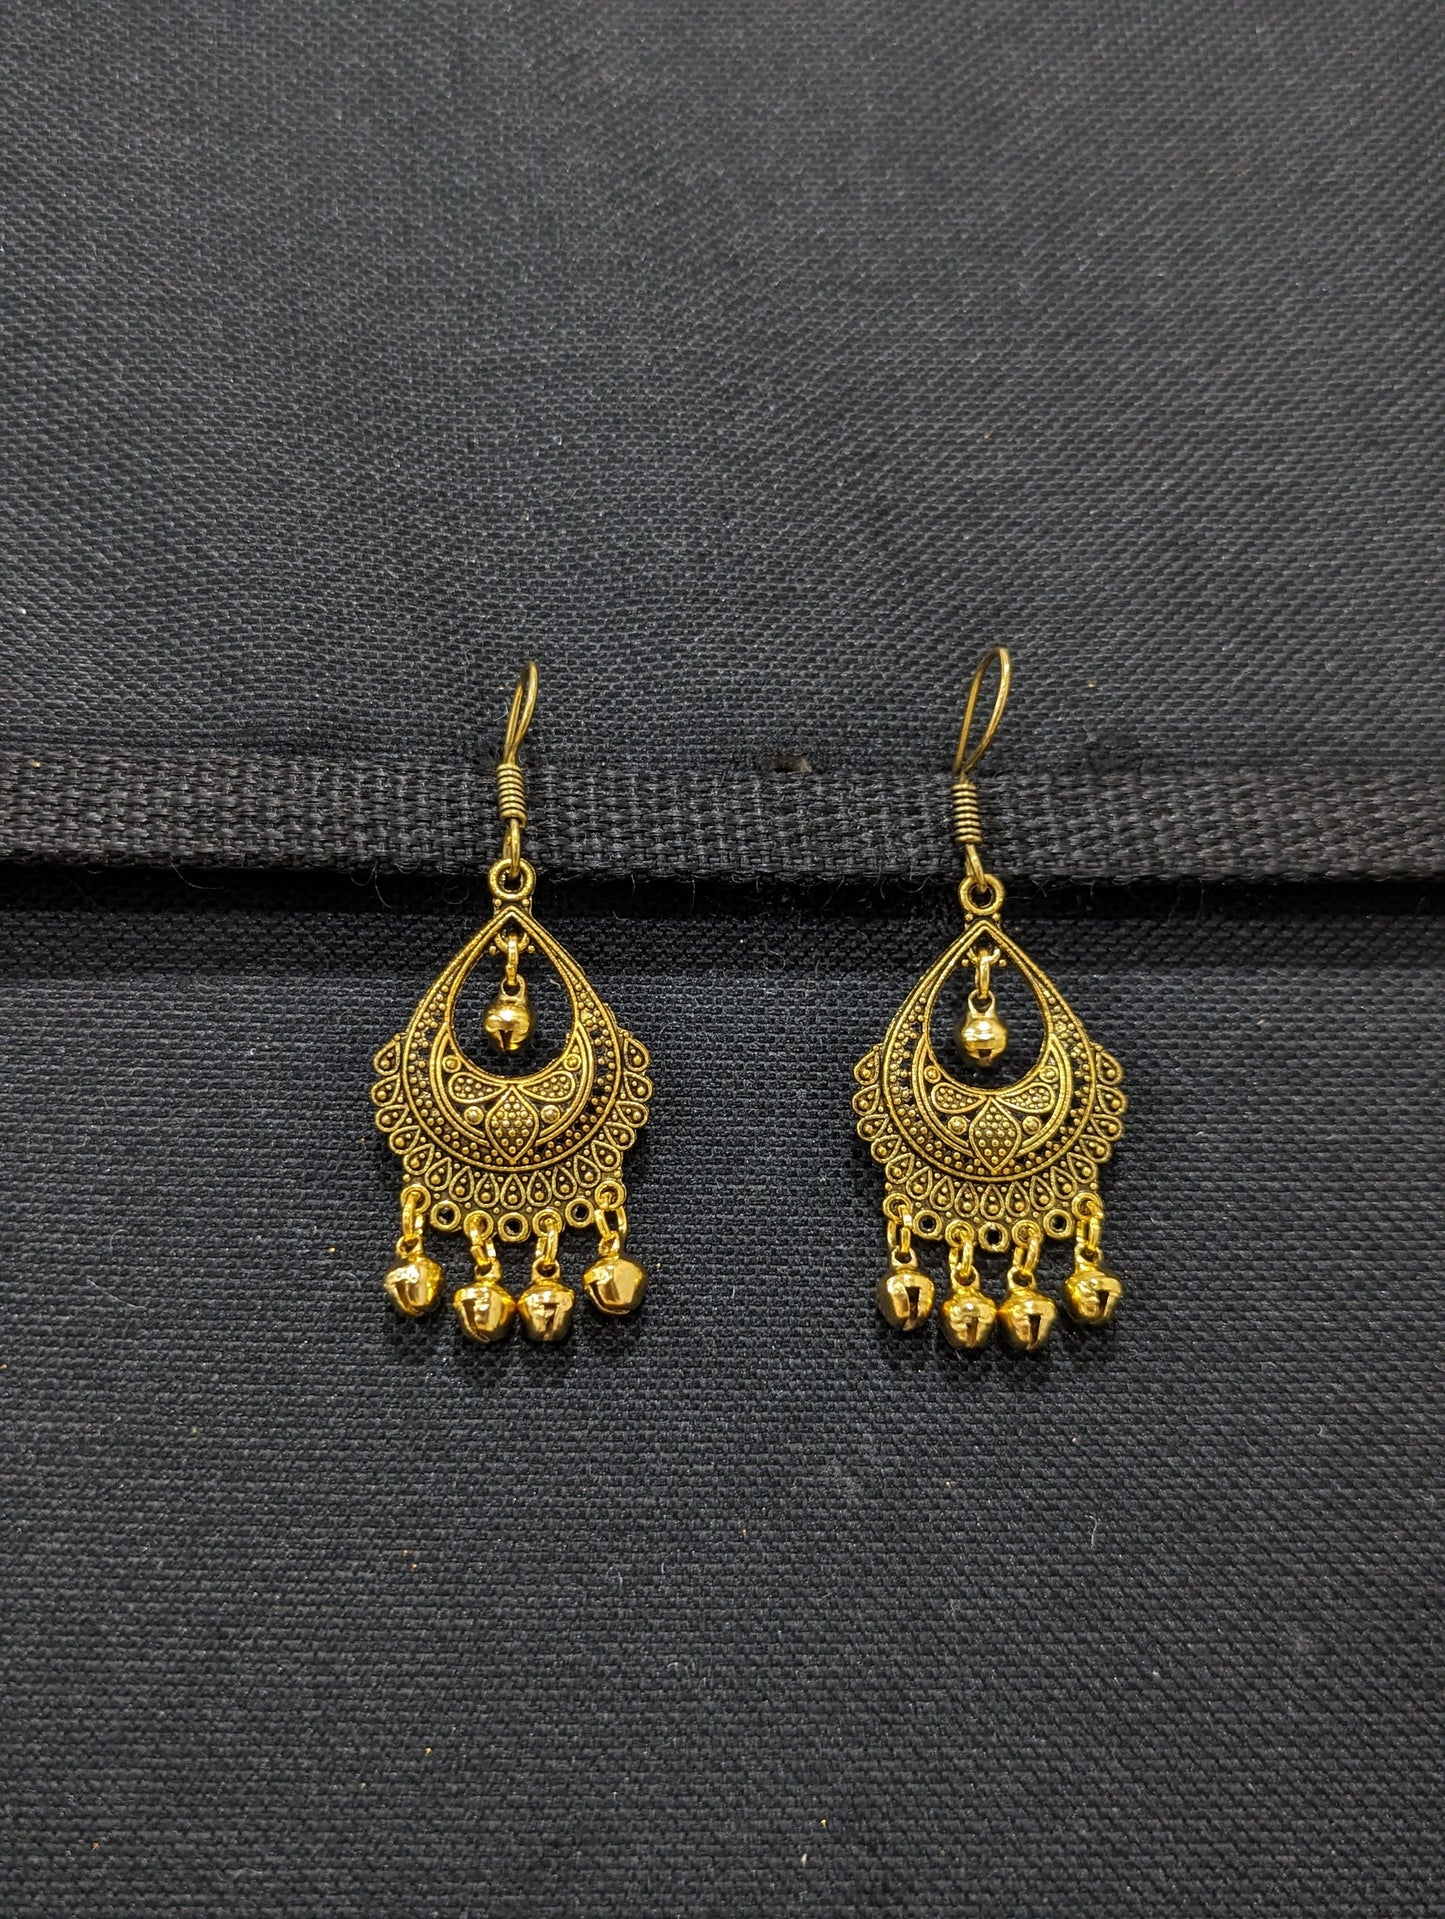 Antique gold oxidized hook drop Earrings - 2 designs